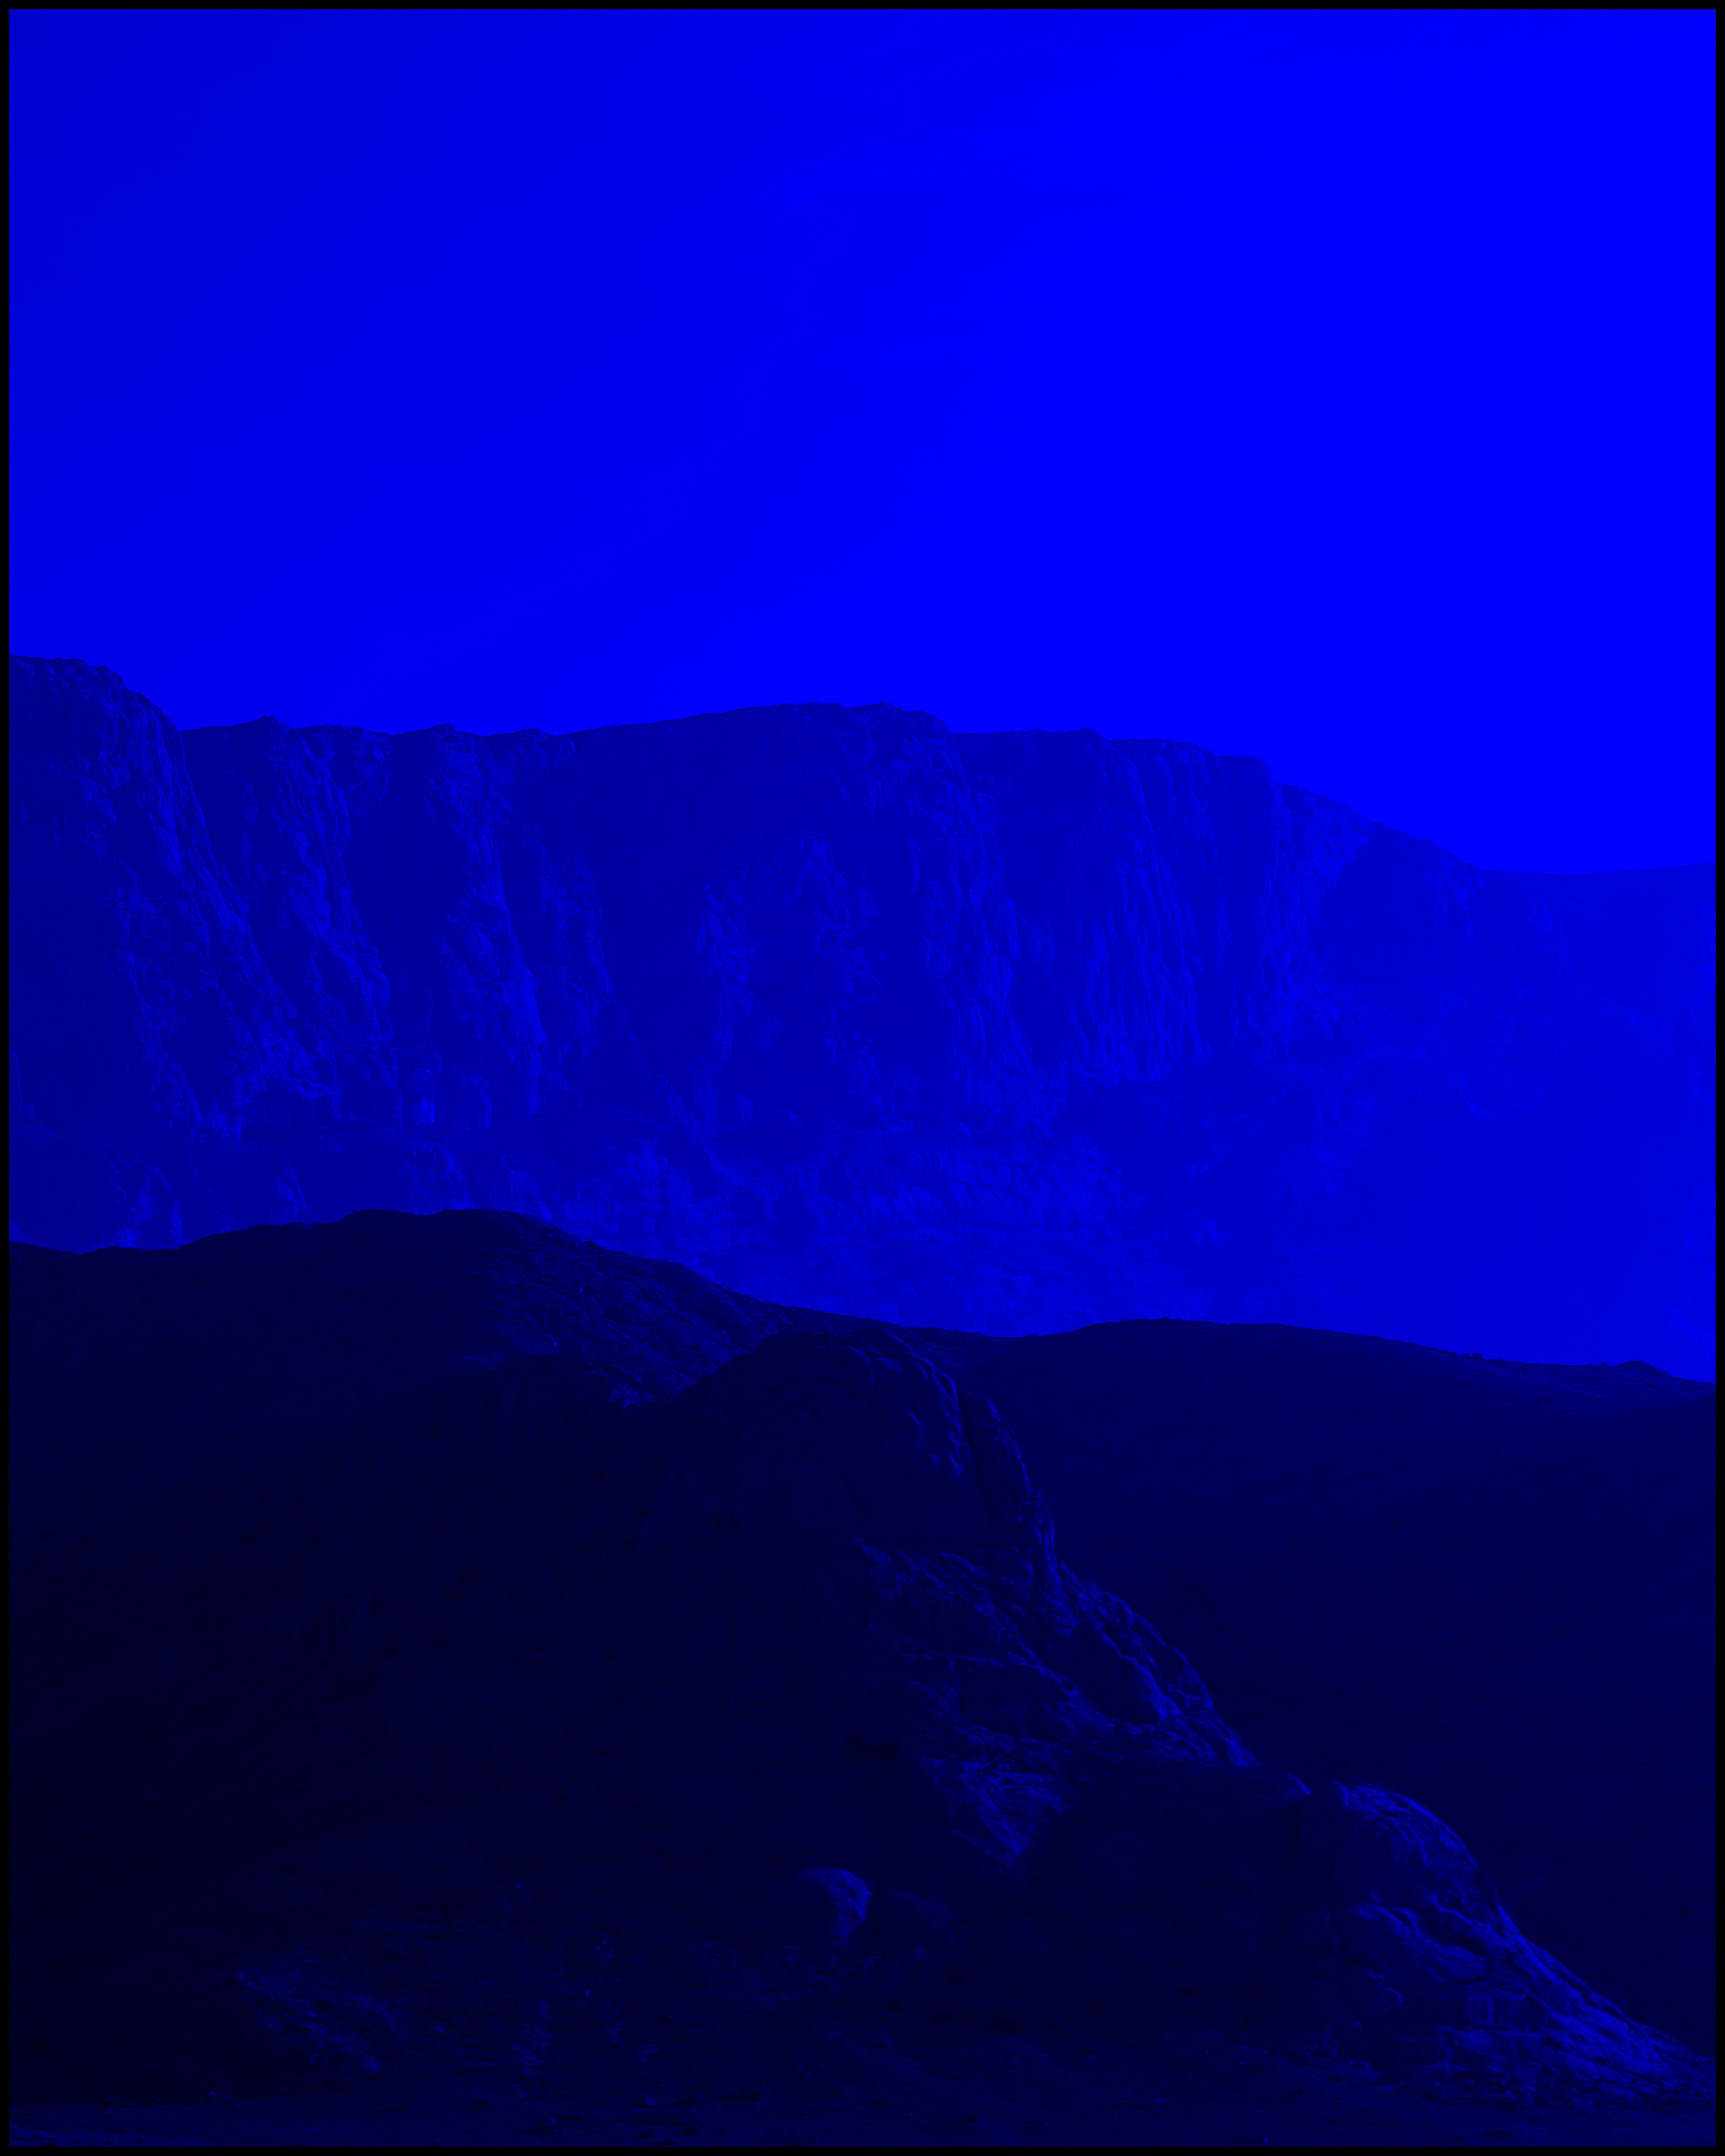 Ugne Pouwell Abstract Photograph - Ultramarine hills - monocolor blue photography of desert dunes